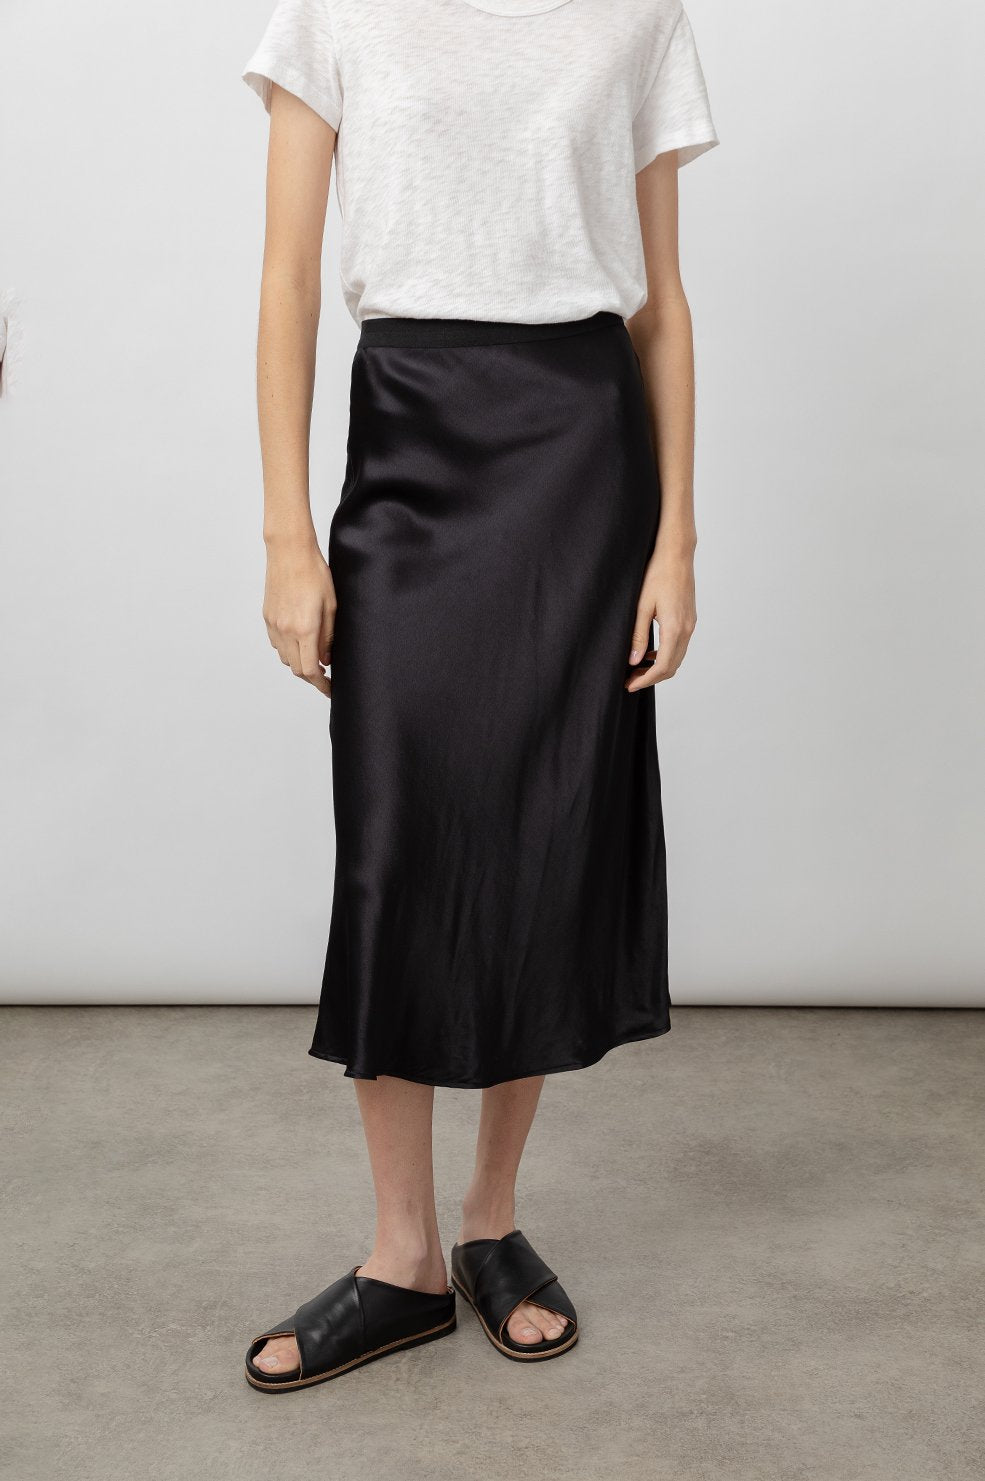 Berlin Skirt in Black - Madison's Niche 